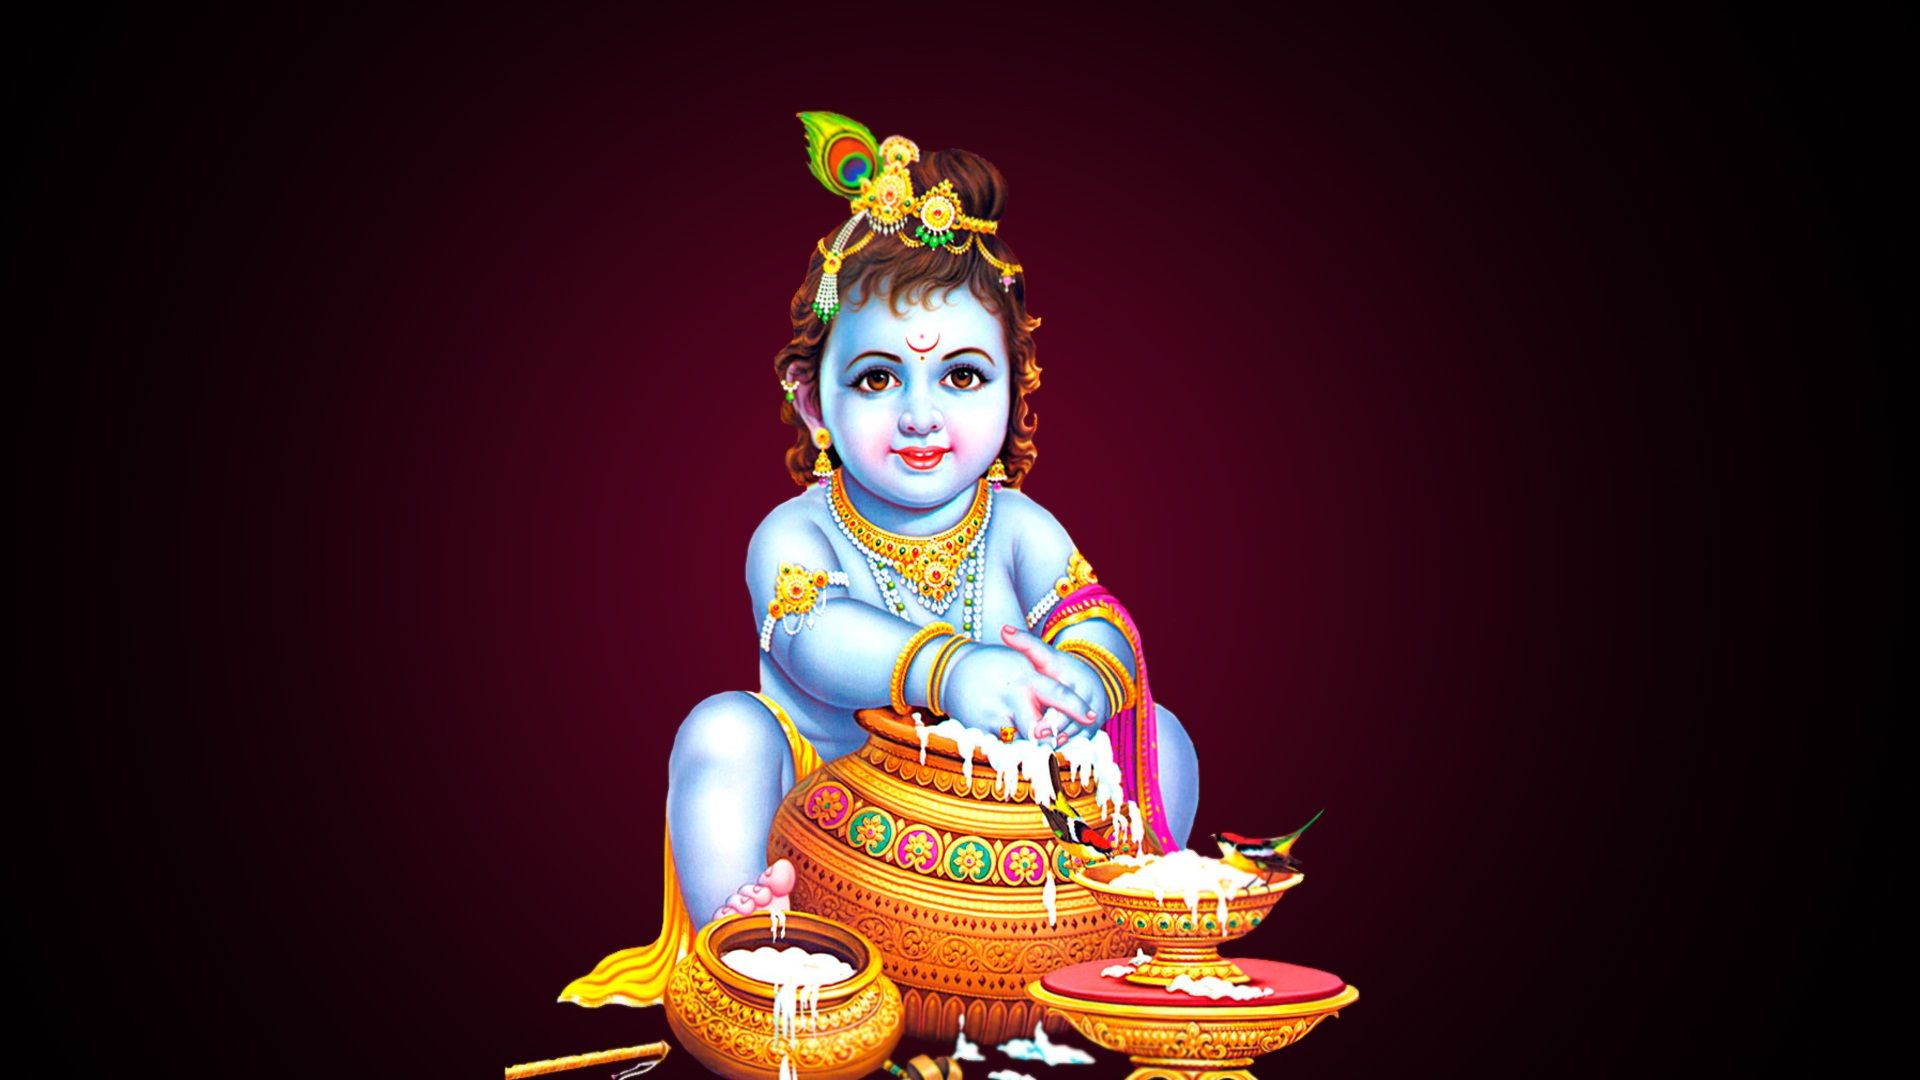 Lord bal Krishna beautiful image | Beautiful hd wallpaper